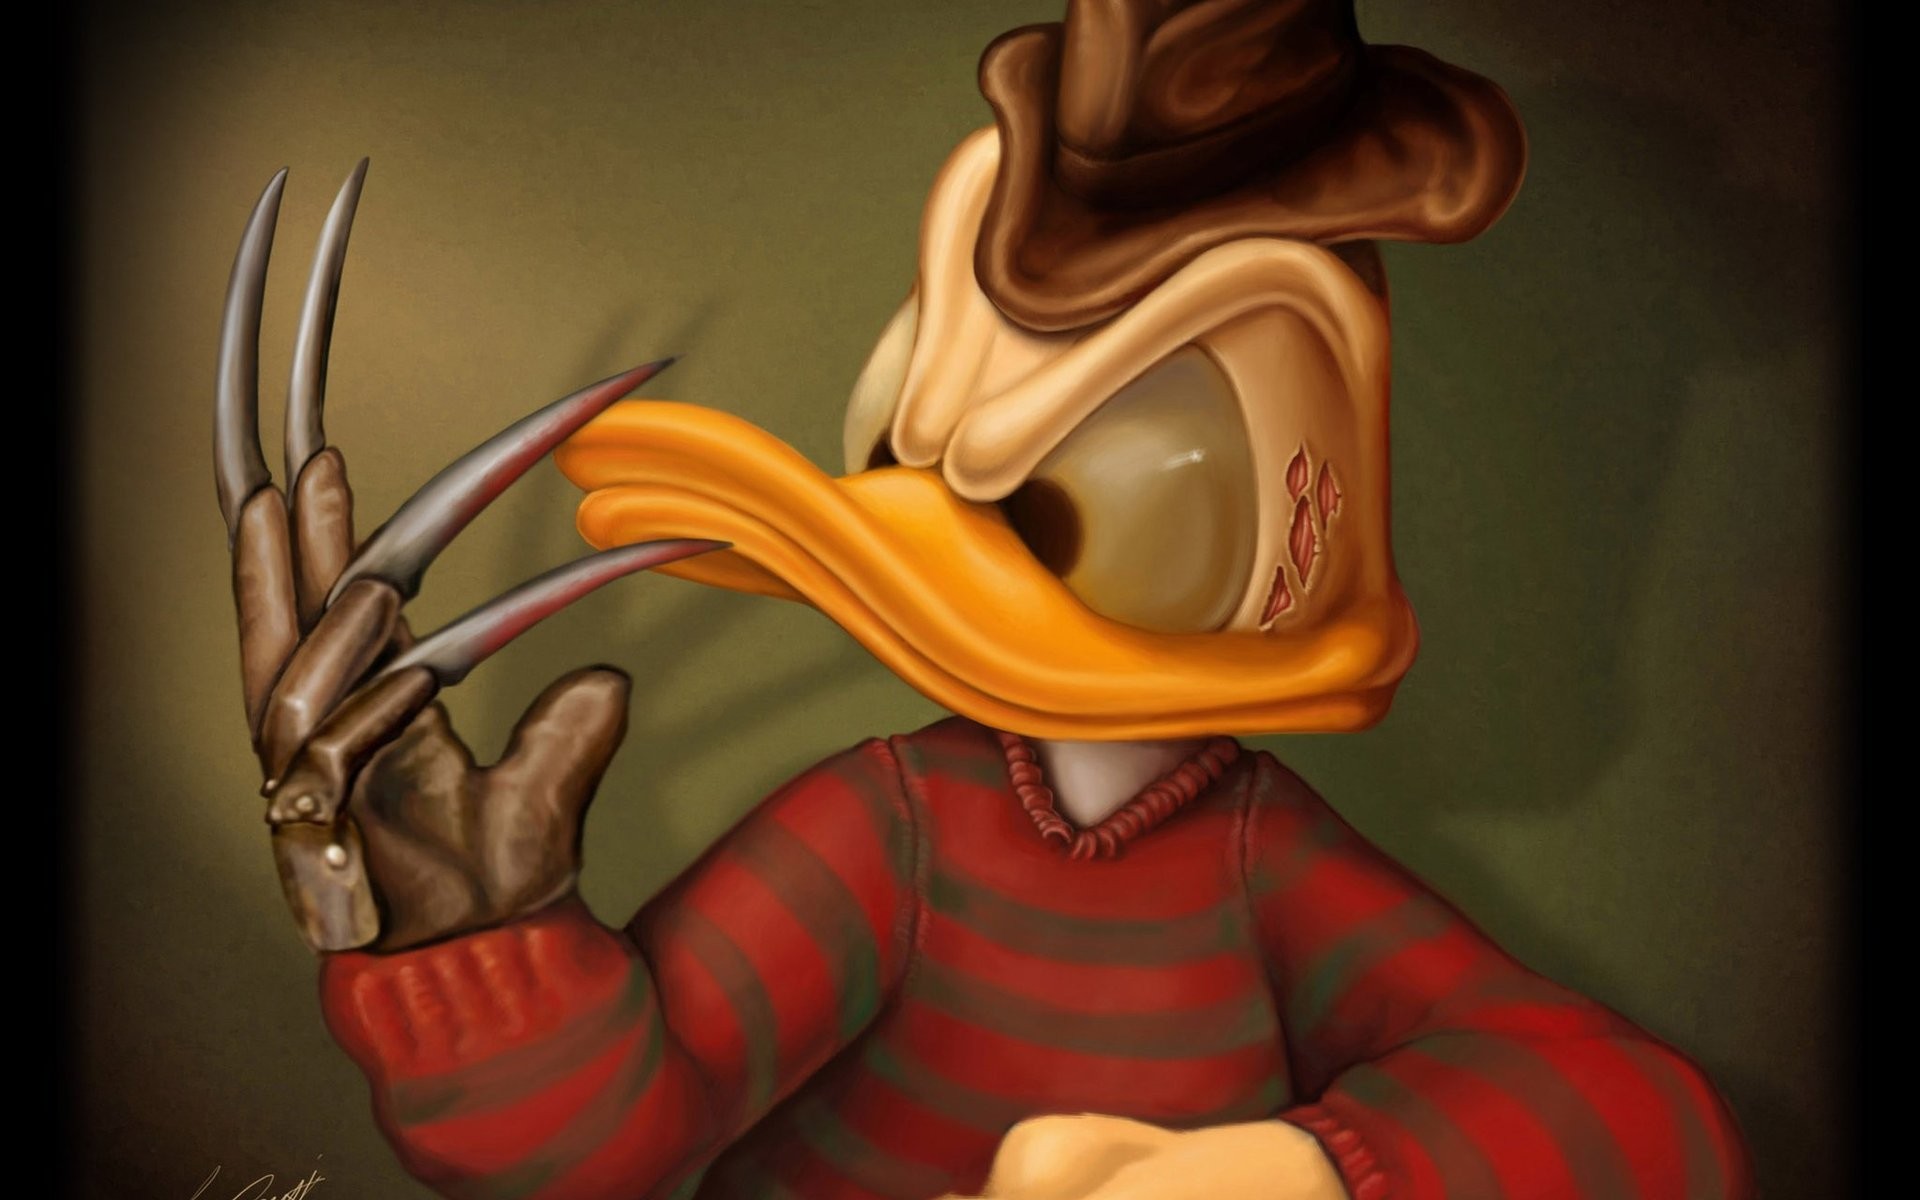 Freddy Krueger Wallpaper For Desktop Donald duck as freddy krueger